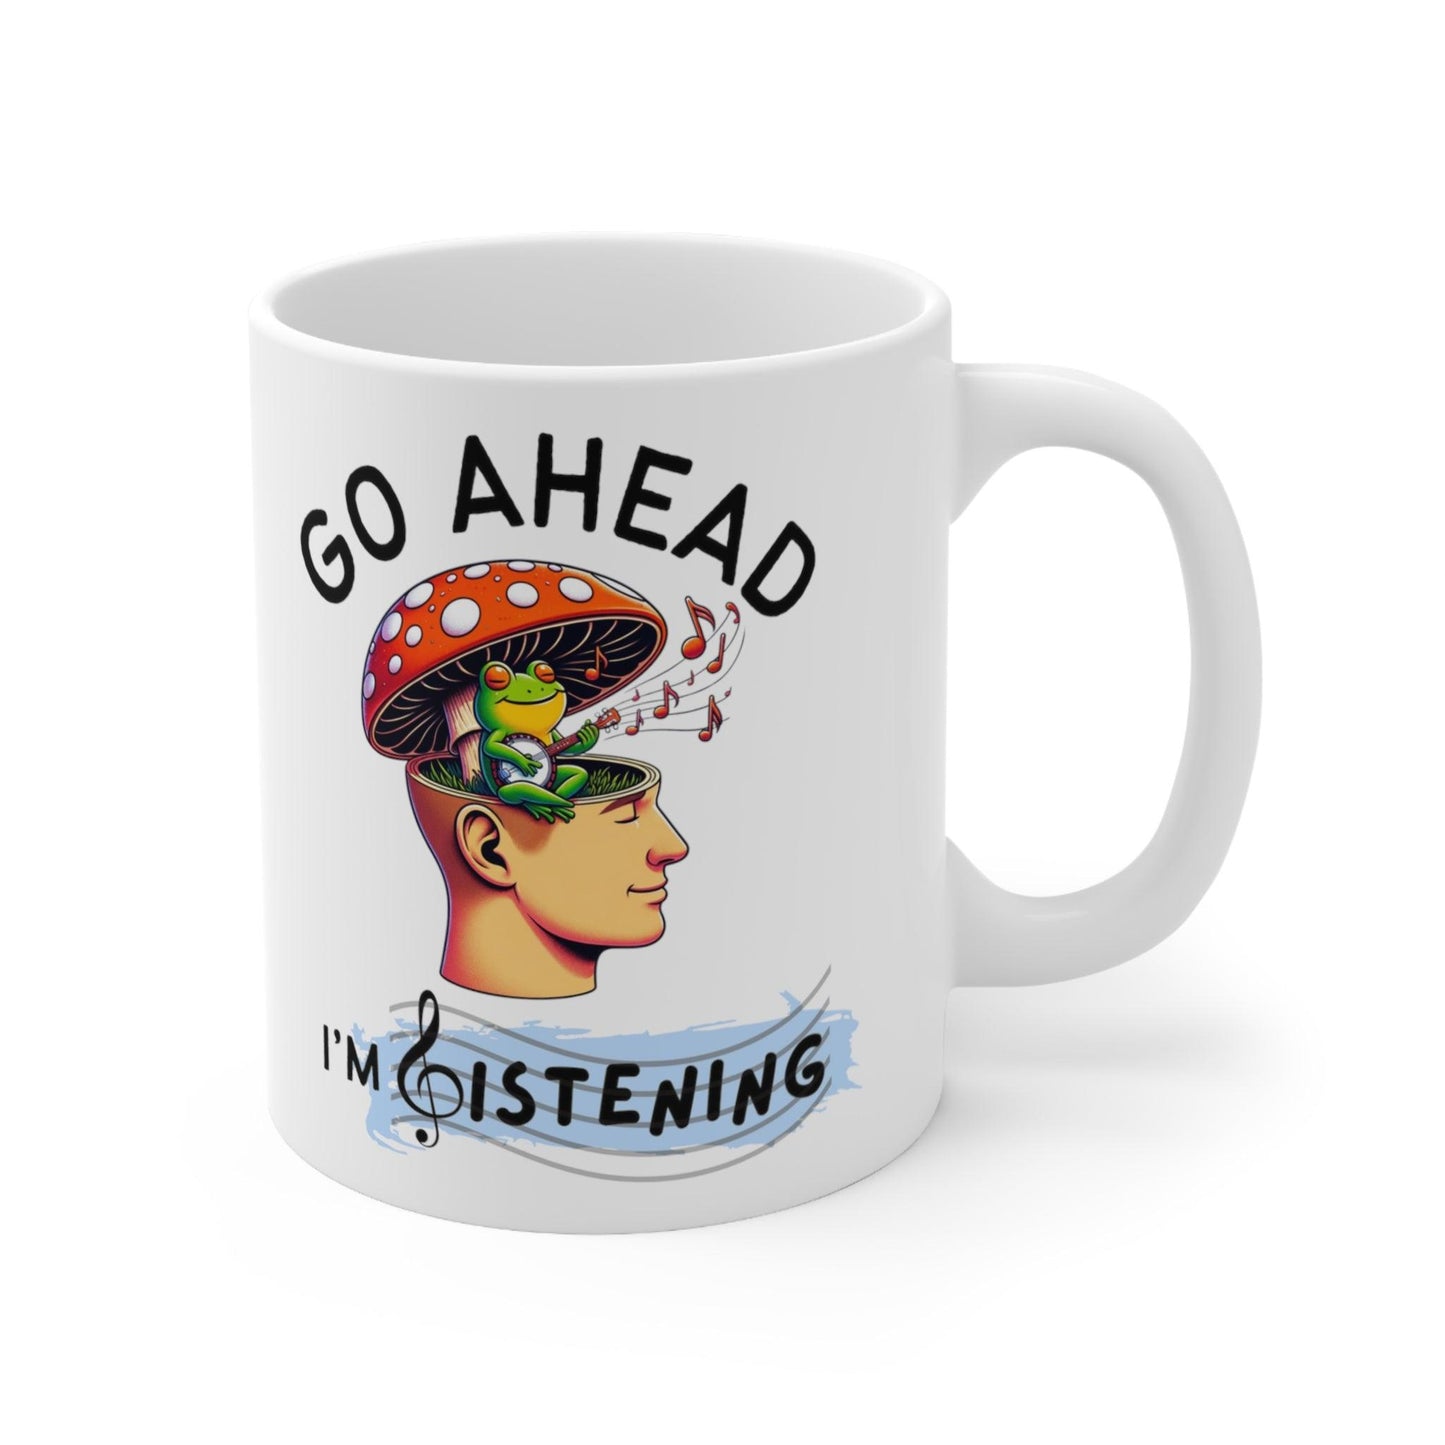 Office Mug for ADHD & Neurodiversity - 'Go Ahead, I'm Listening' - Music Lover's Desk Accessory - Fidget and Focus